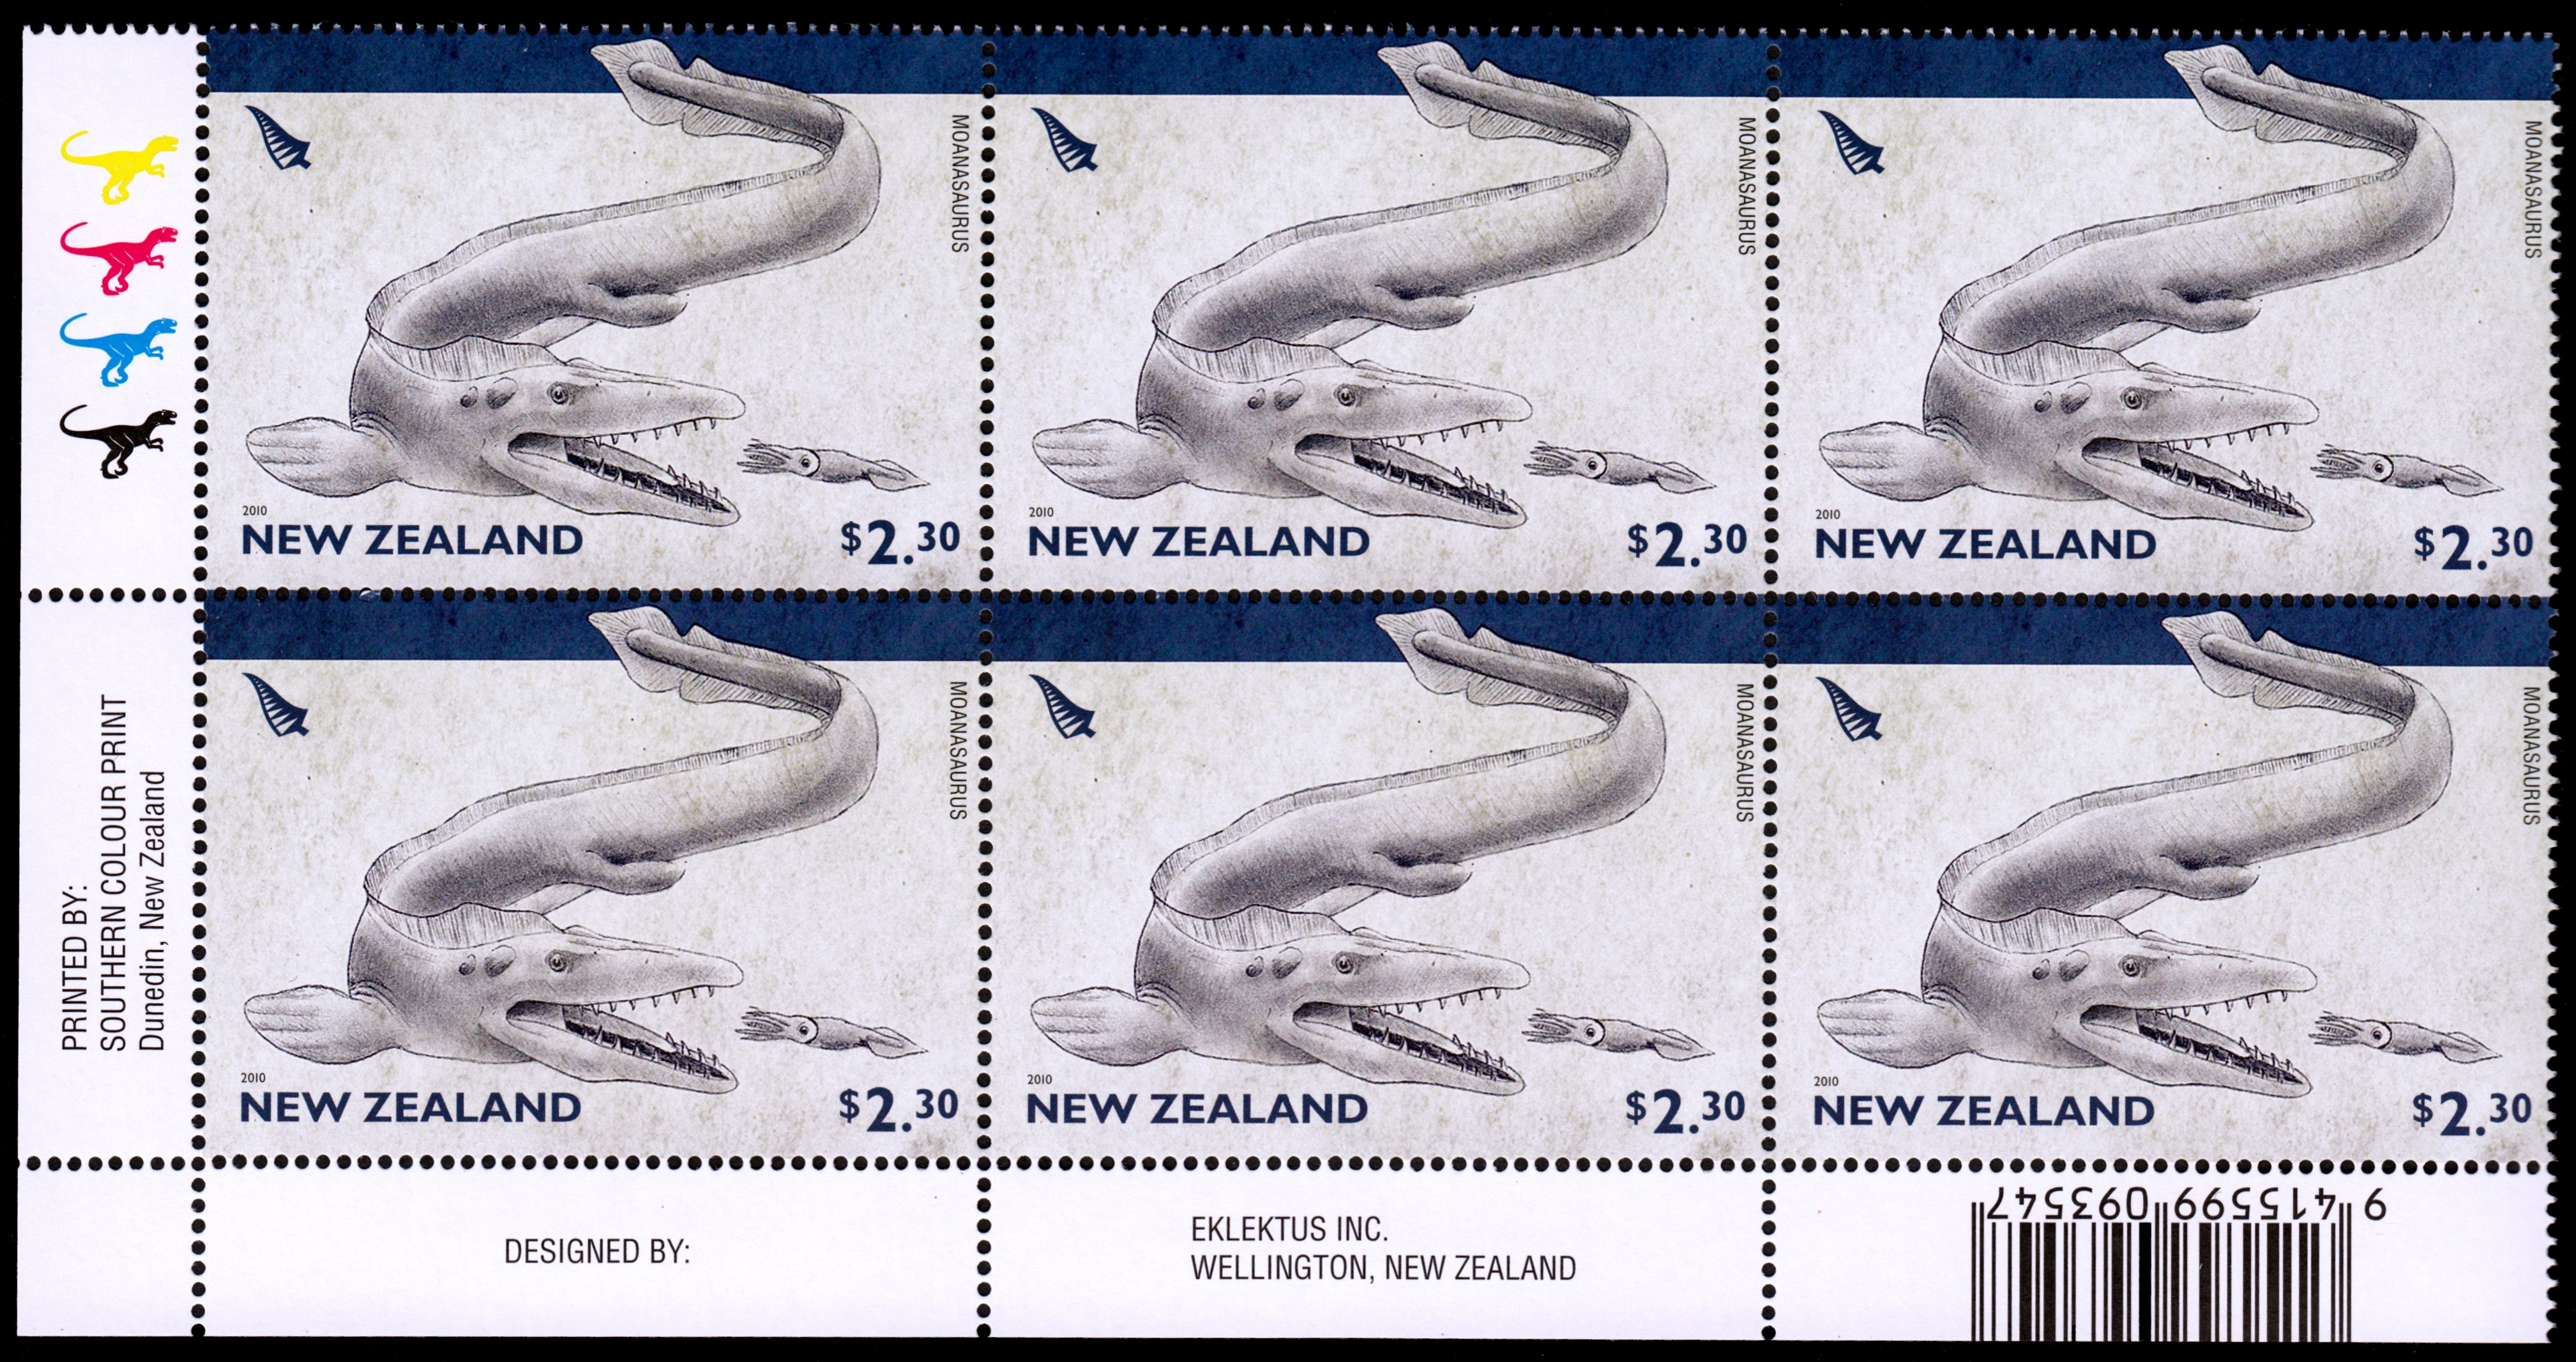 Moanasaurus on stamp of New Zealand 2010